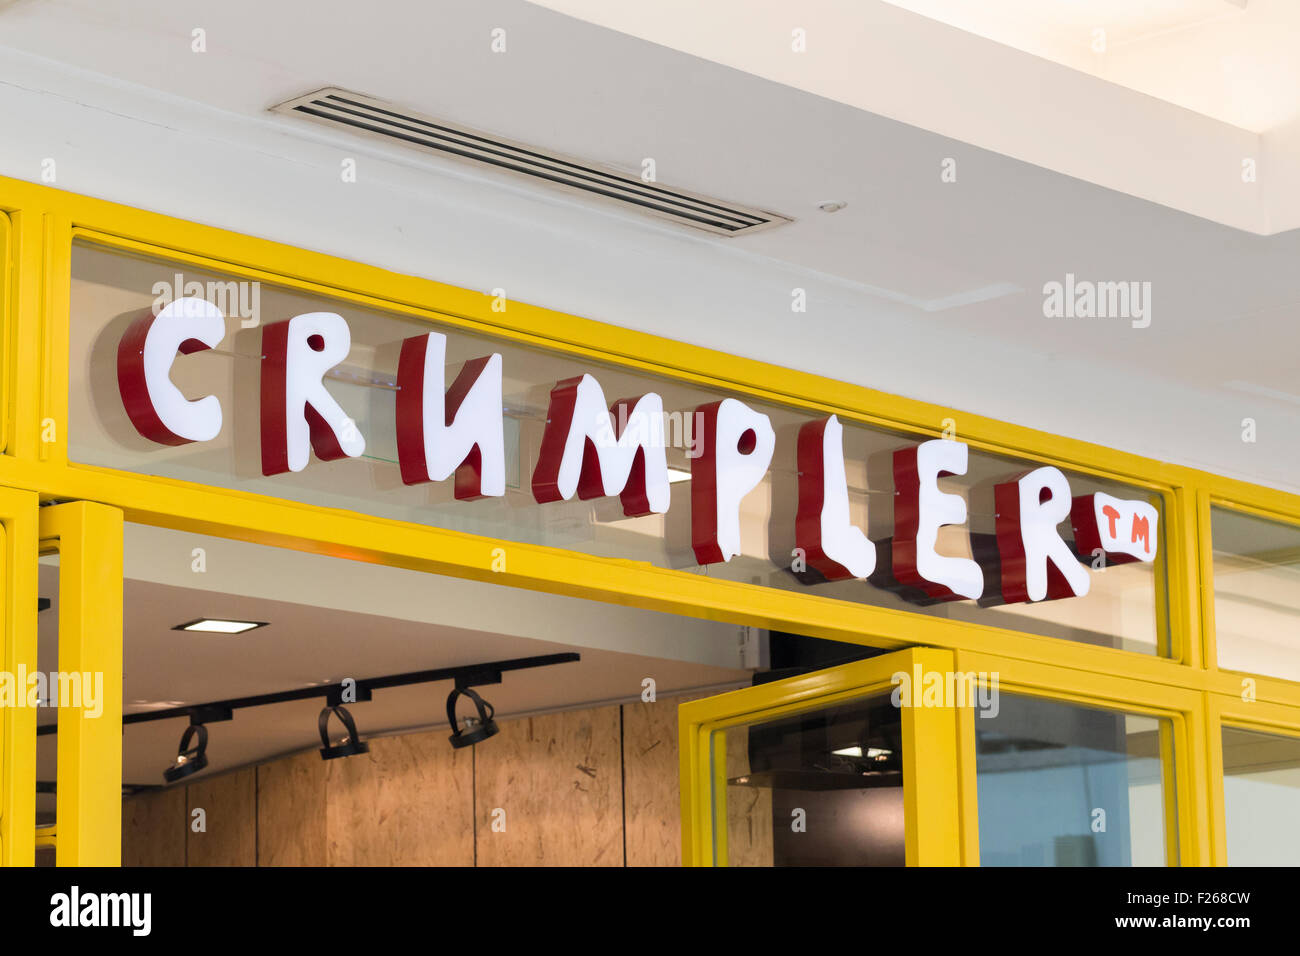 Crumpler logo Stock Photo